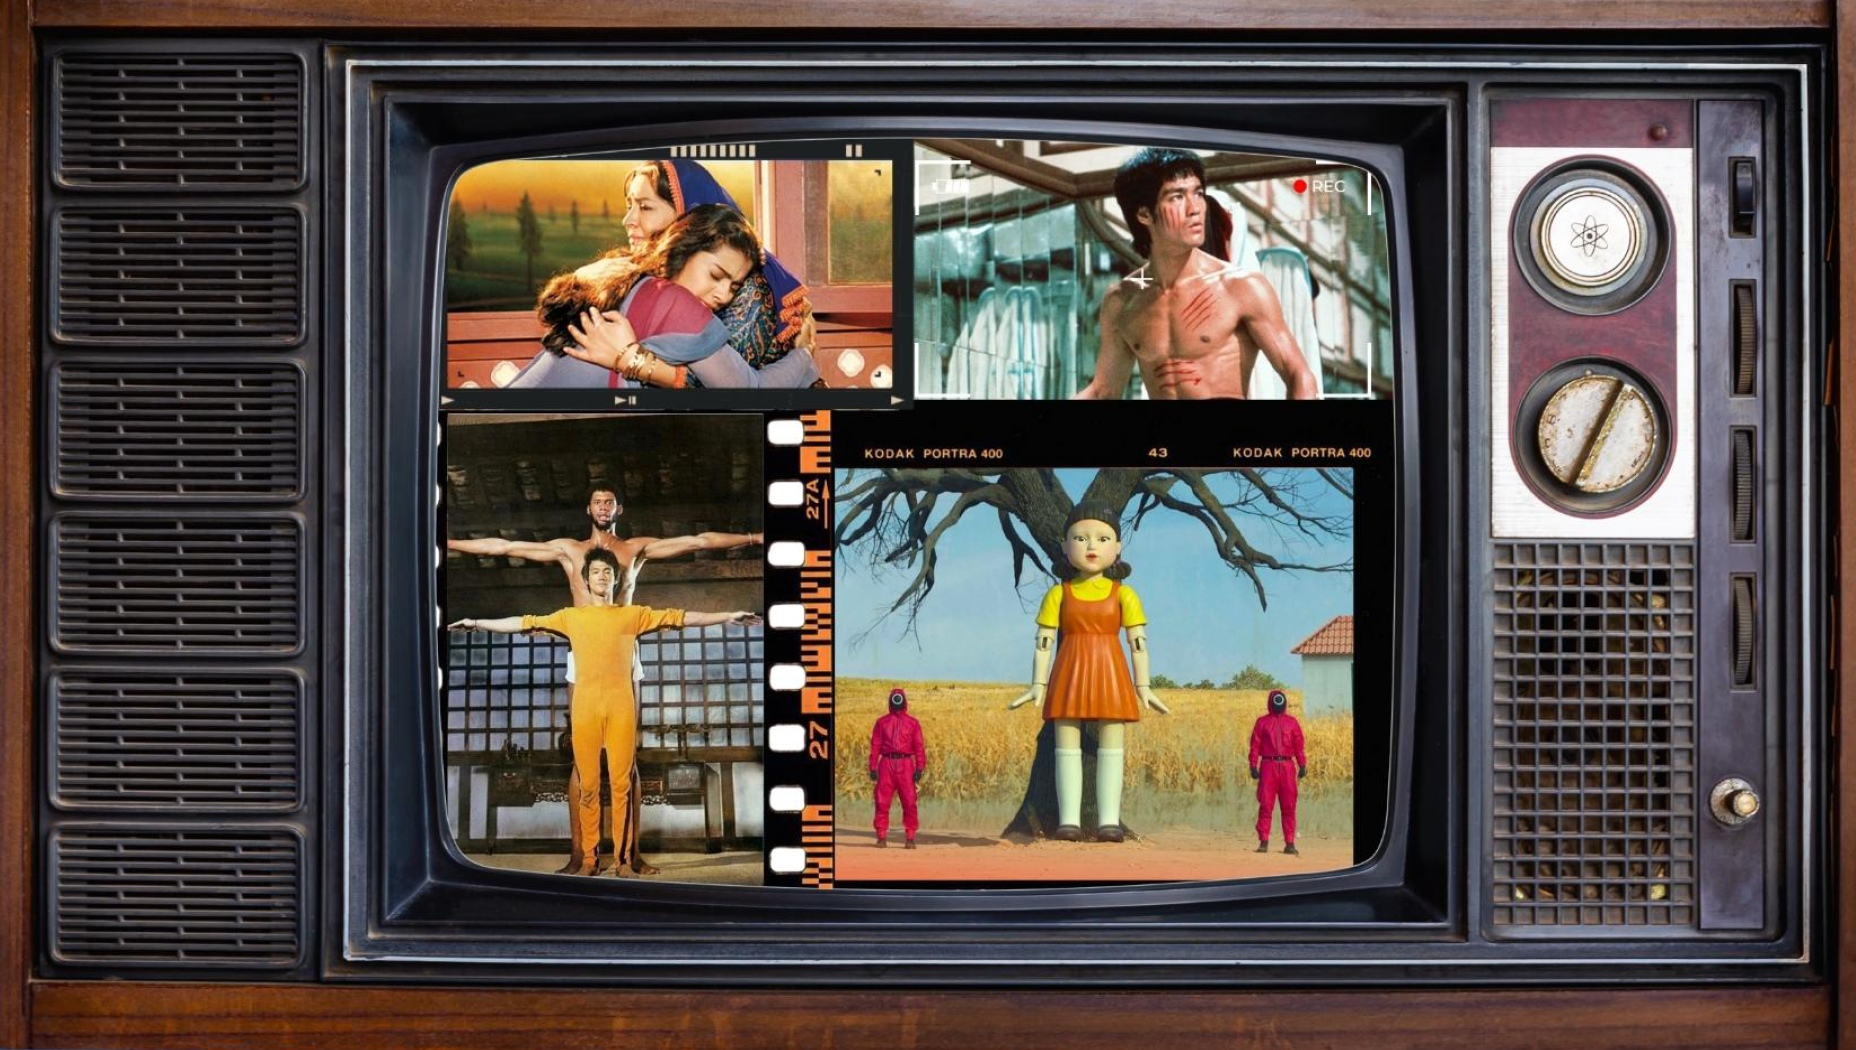 Retro TV with collage of film stills inside